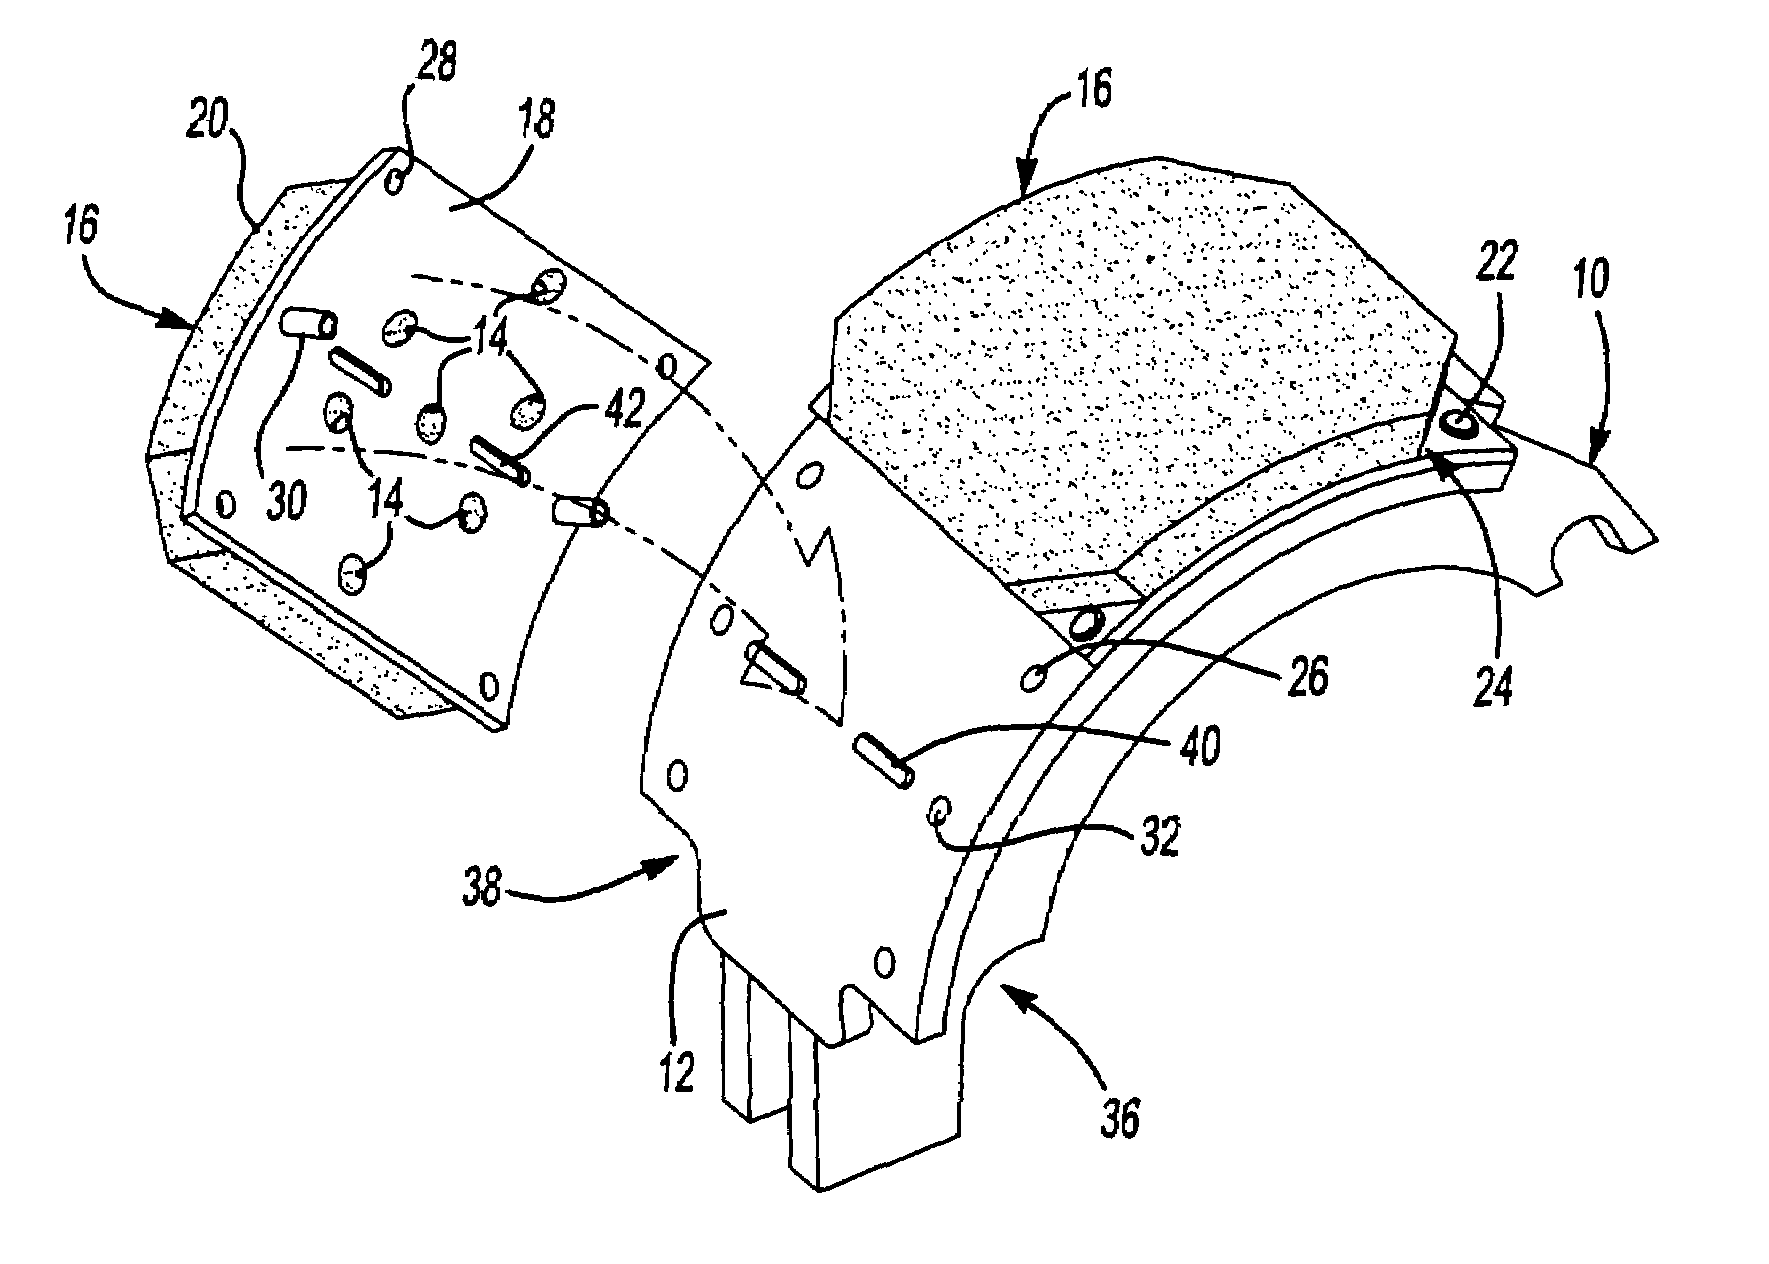 Brake shoe and brake lining blocks with keyed connection